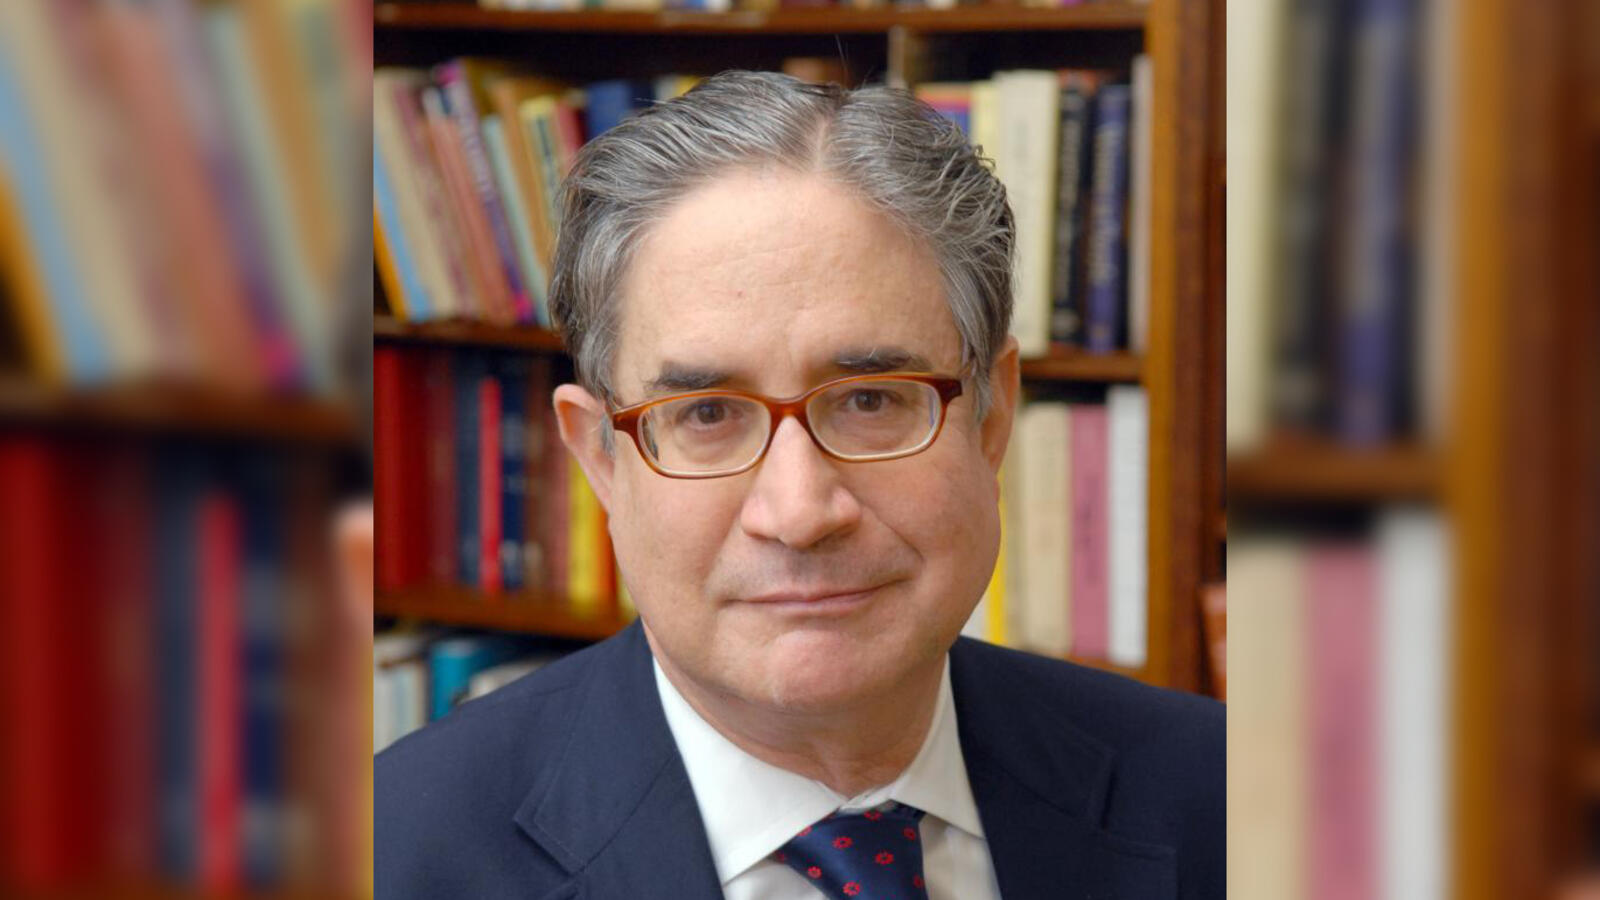 Yale History Professor Paul Freedman